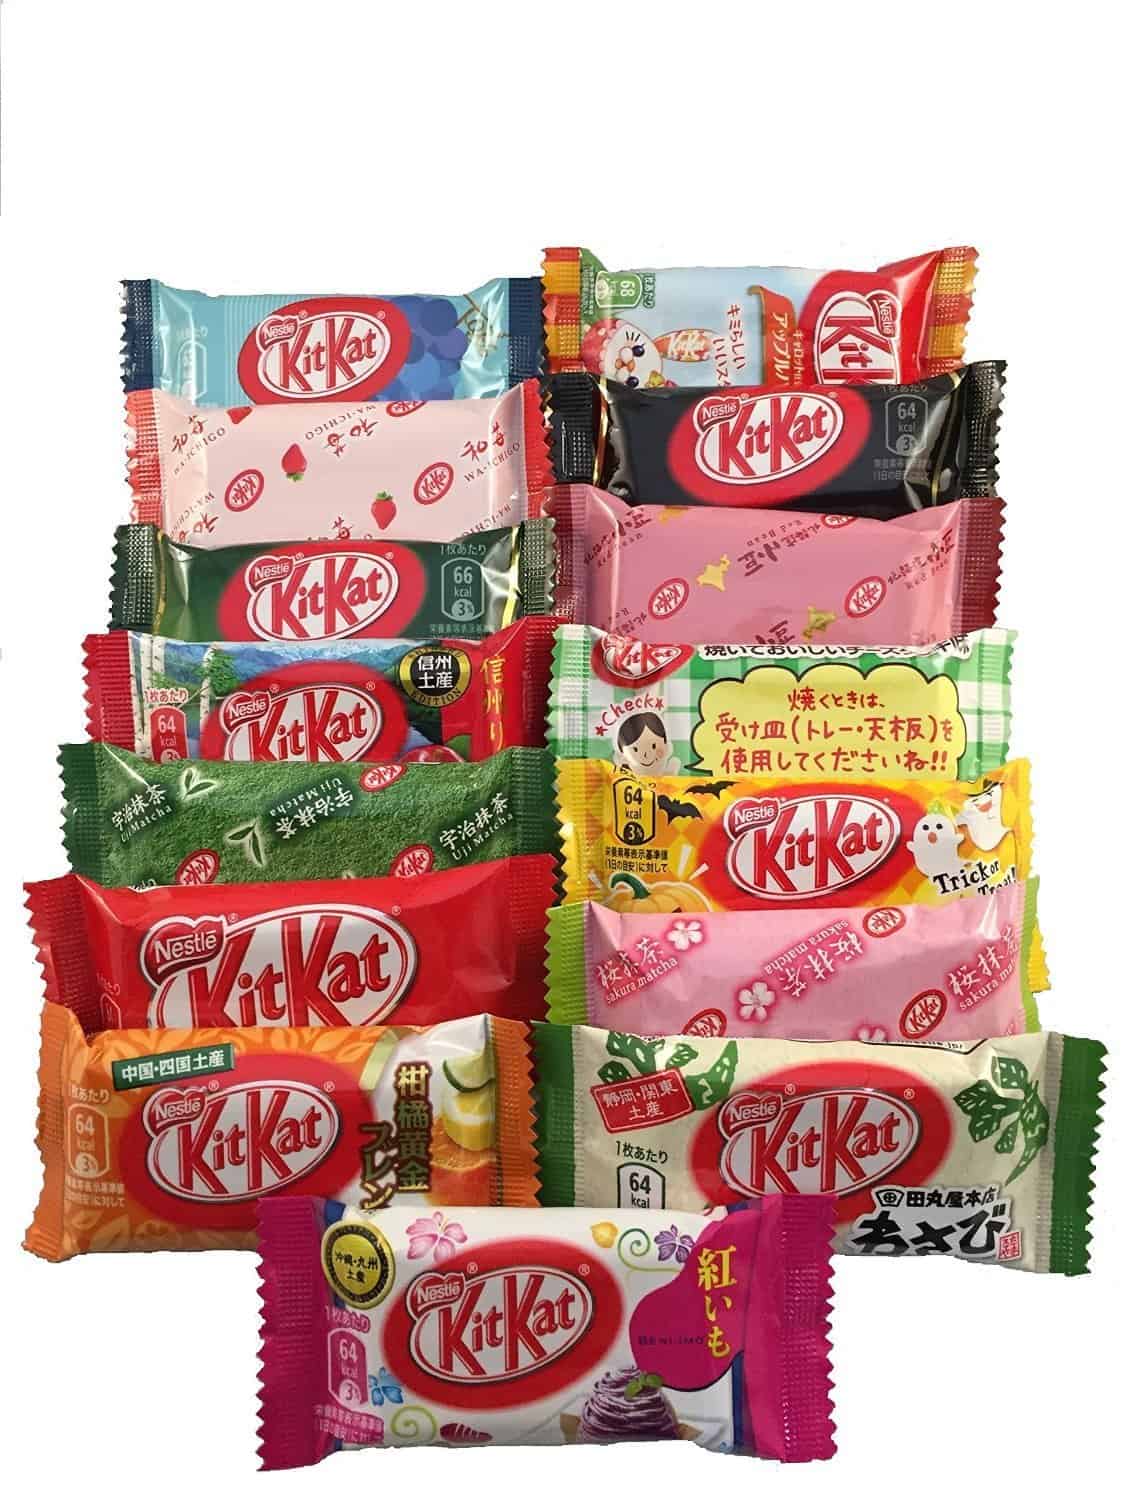 Japanese kitkat flavors